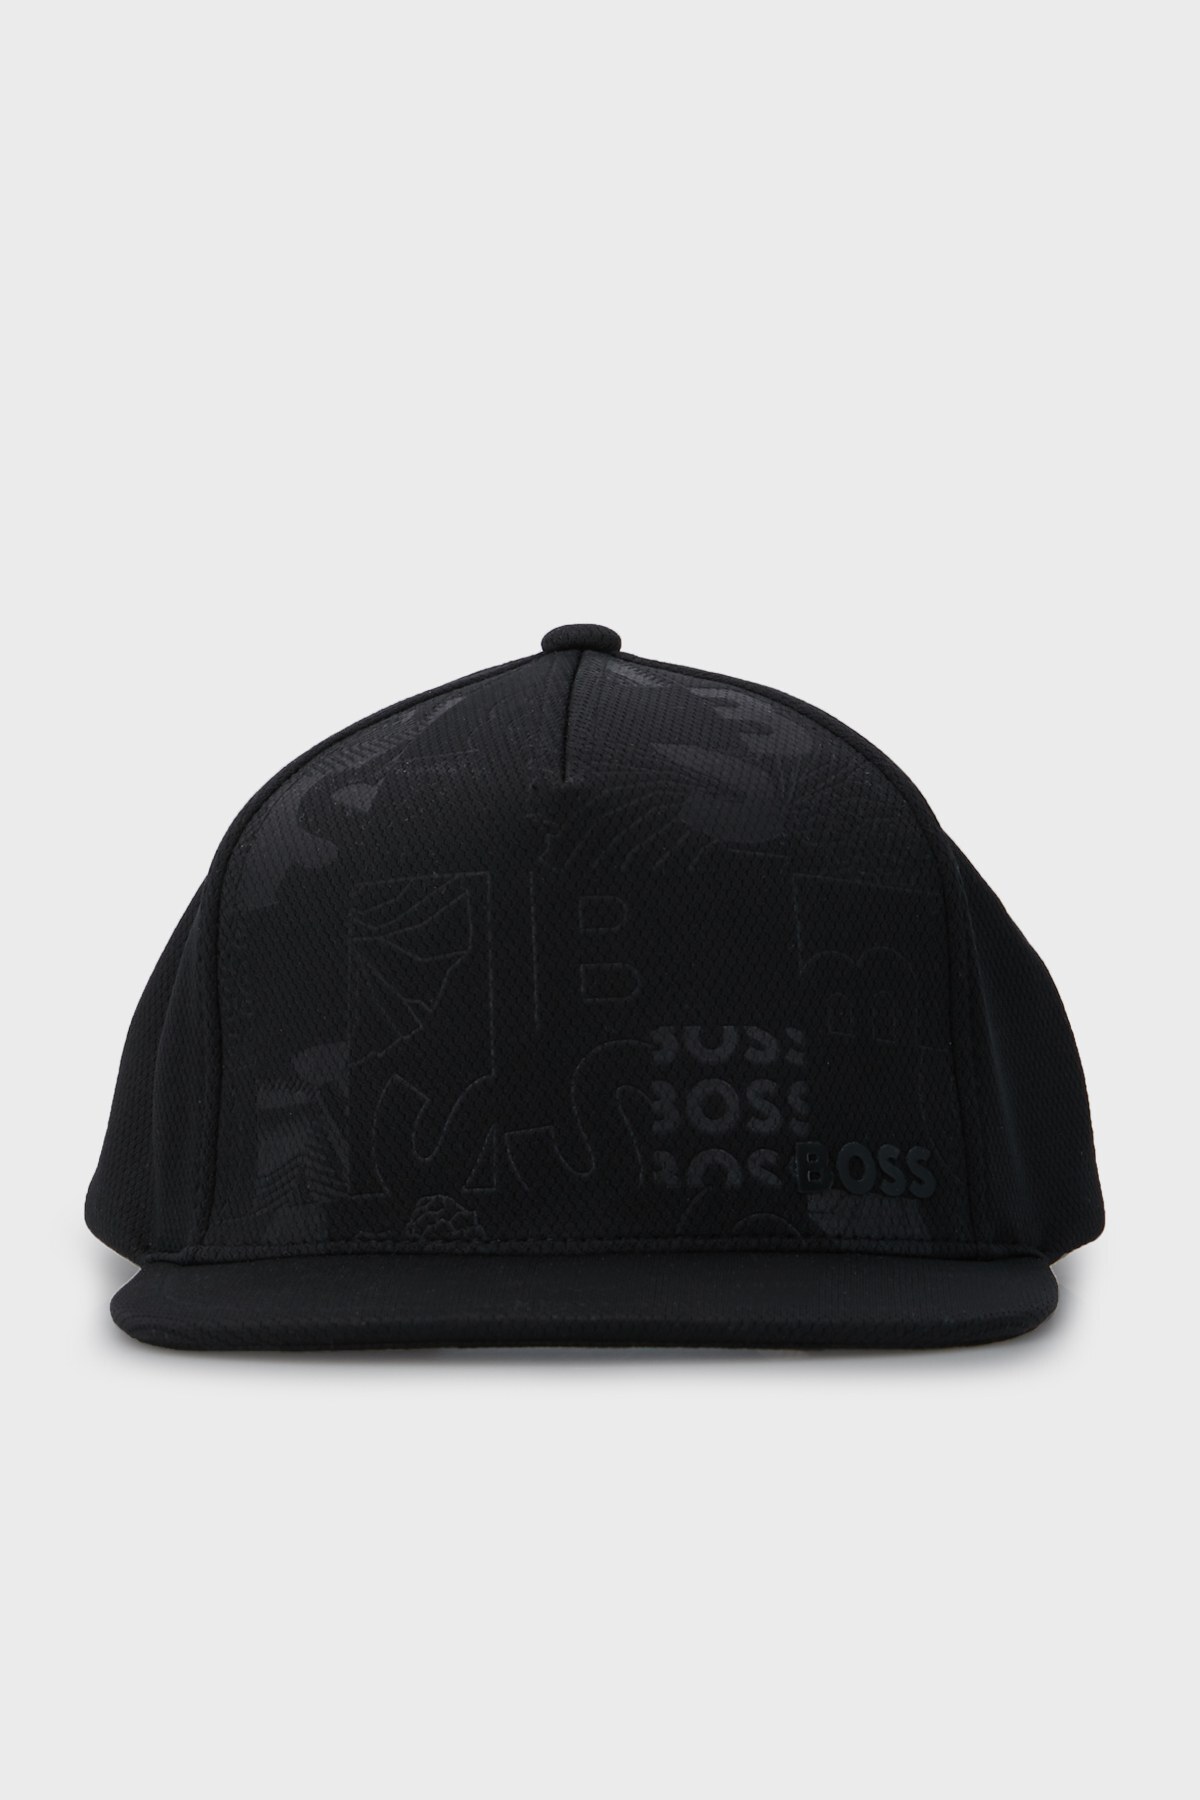 Boss Logo Detaylı Erkek Şapka 50466155 001 SİYAH